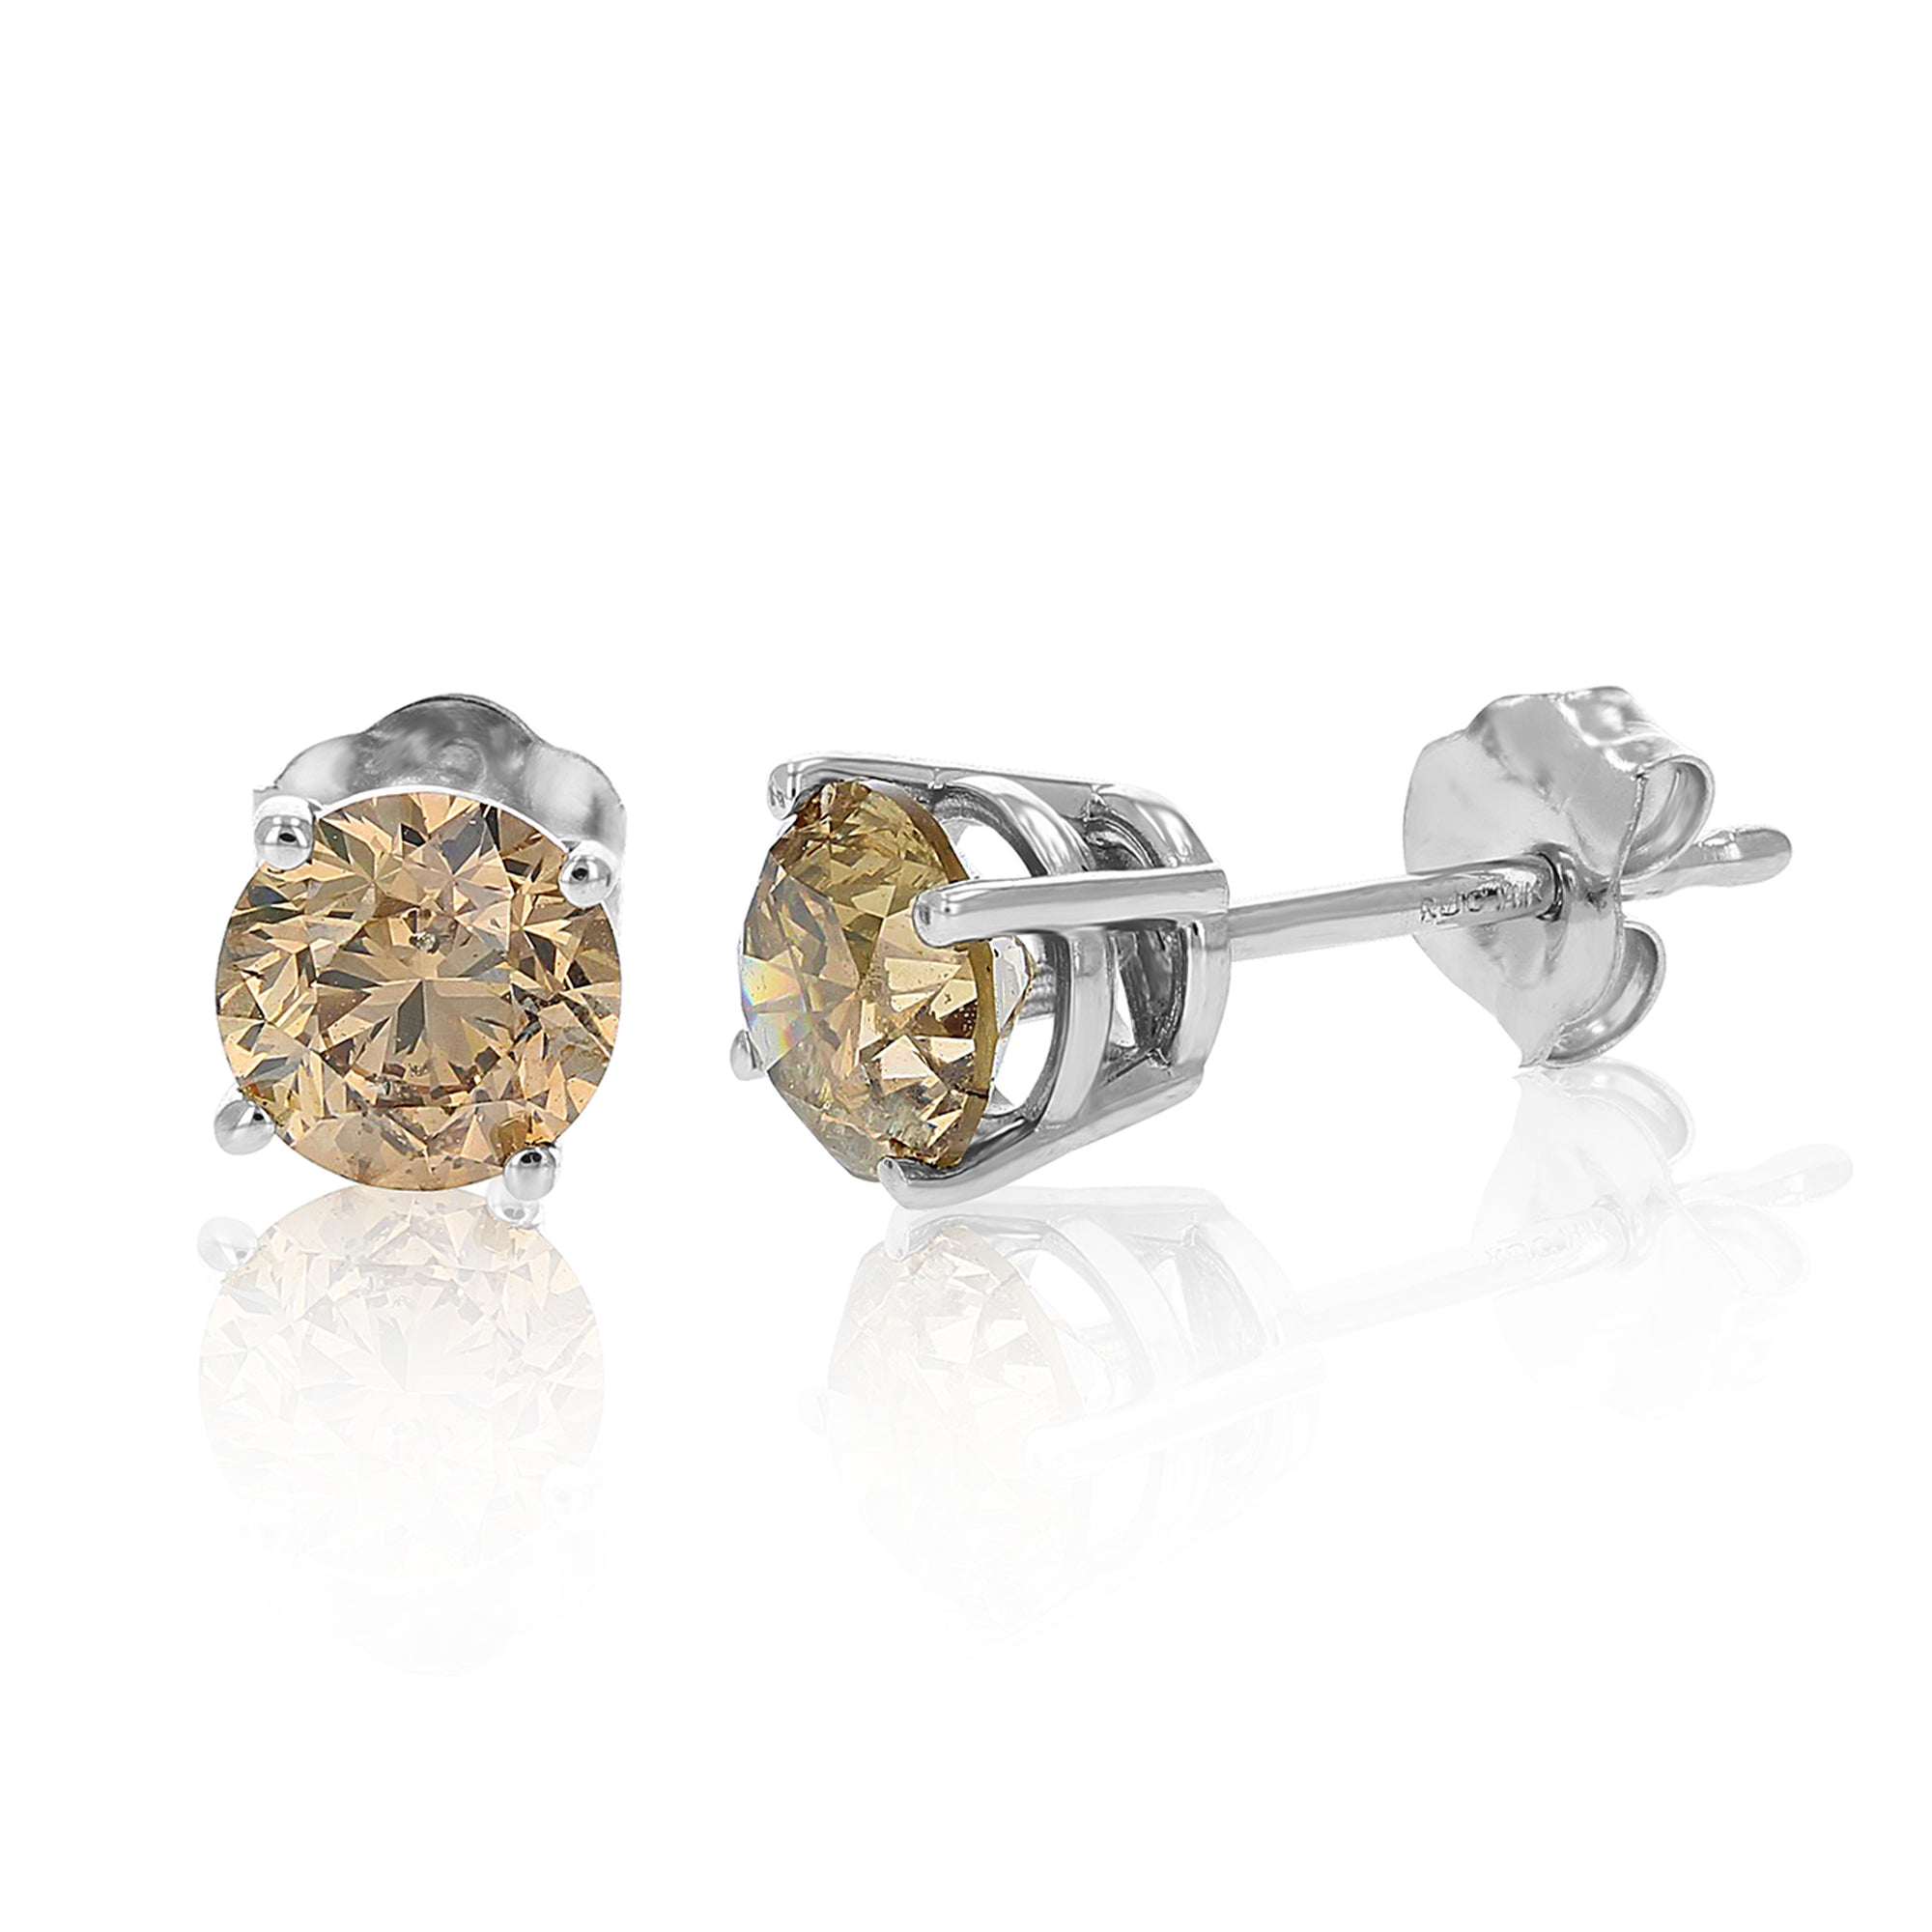  Vir Jewels 14K White Gold Screw Backs Replacement for Stud  Earrings (1 Pair) : Vir Jewels: Clothing, Shoes & Jewelry